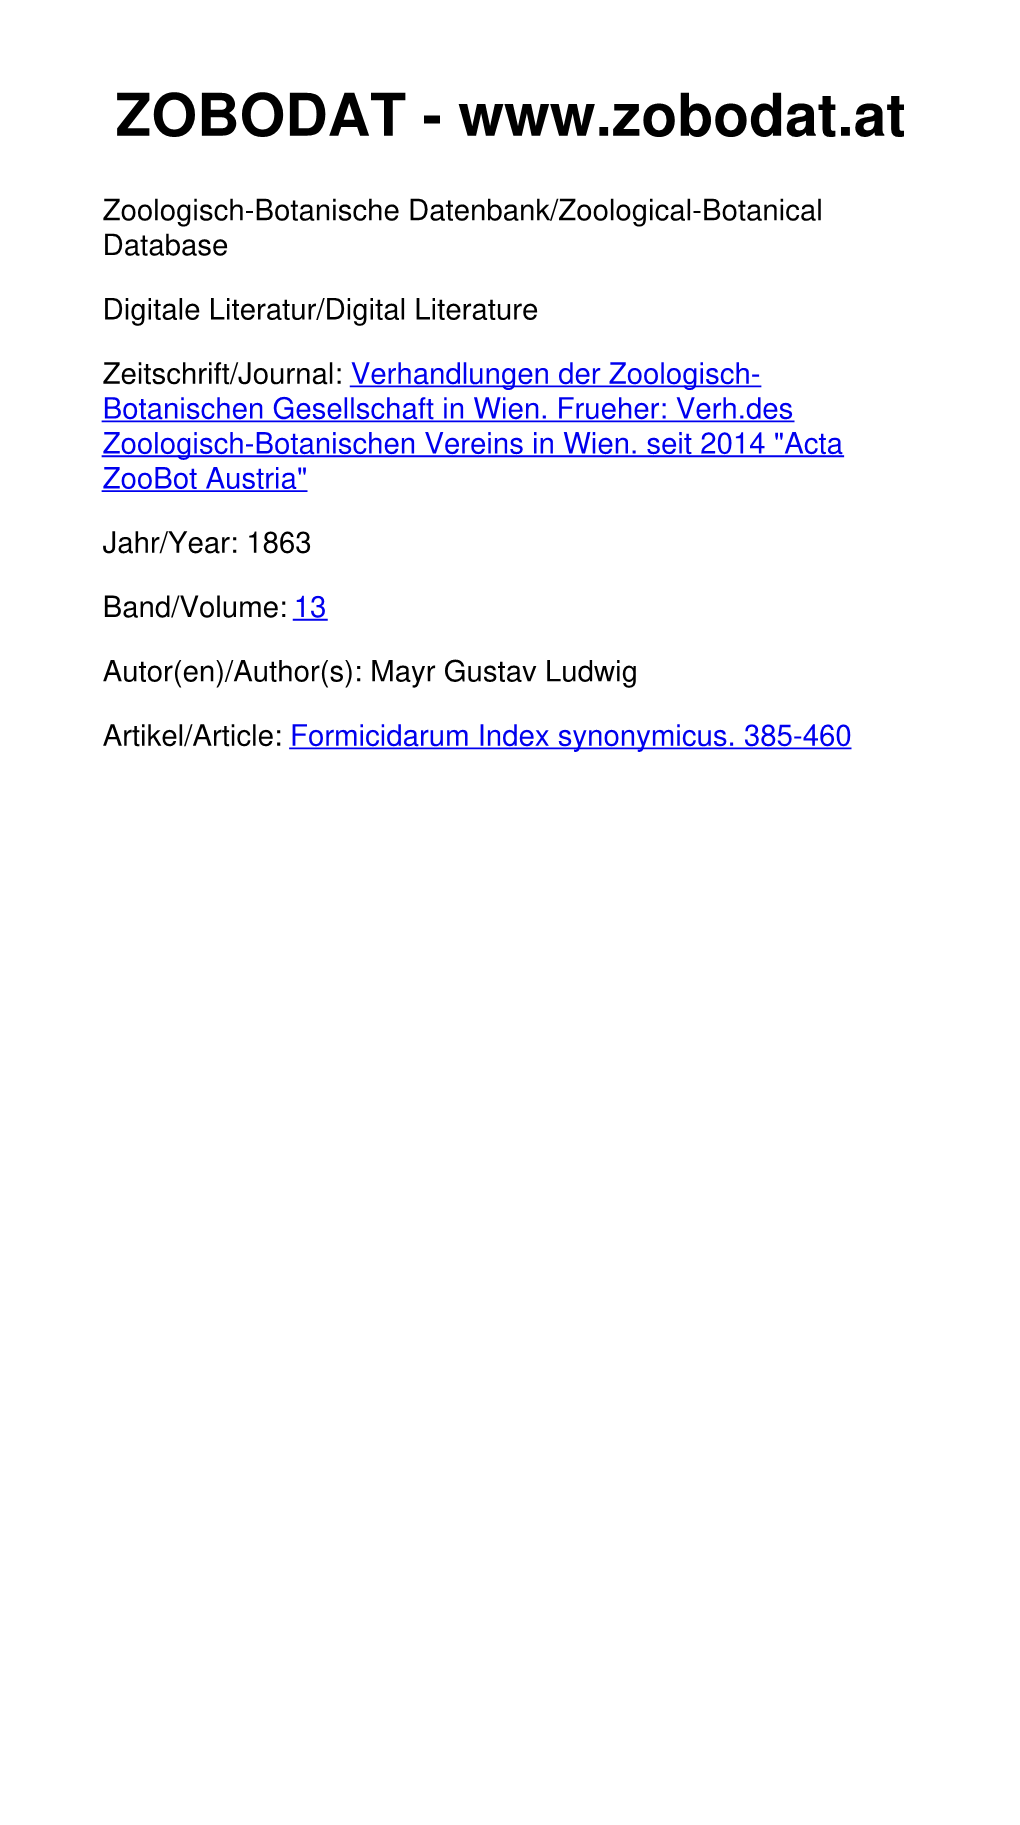 Formicidarum Index Synonymicus. 385-460 © Zool.-Bot